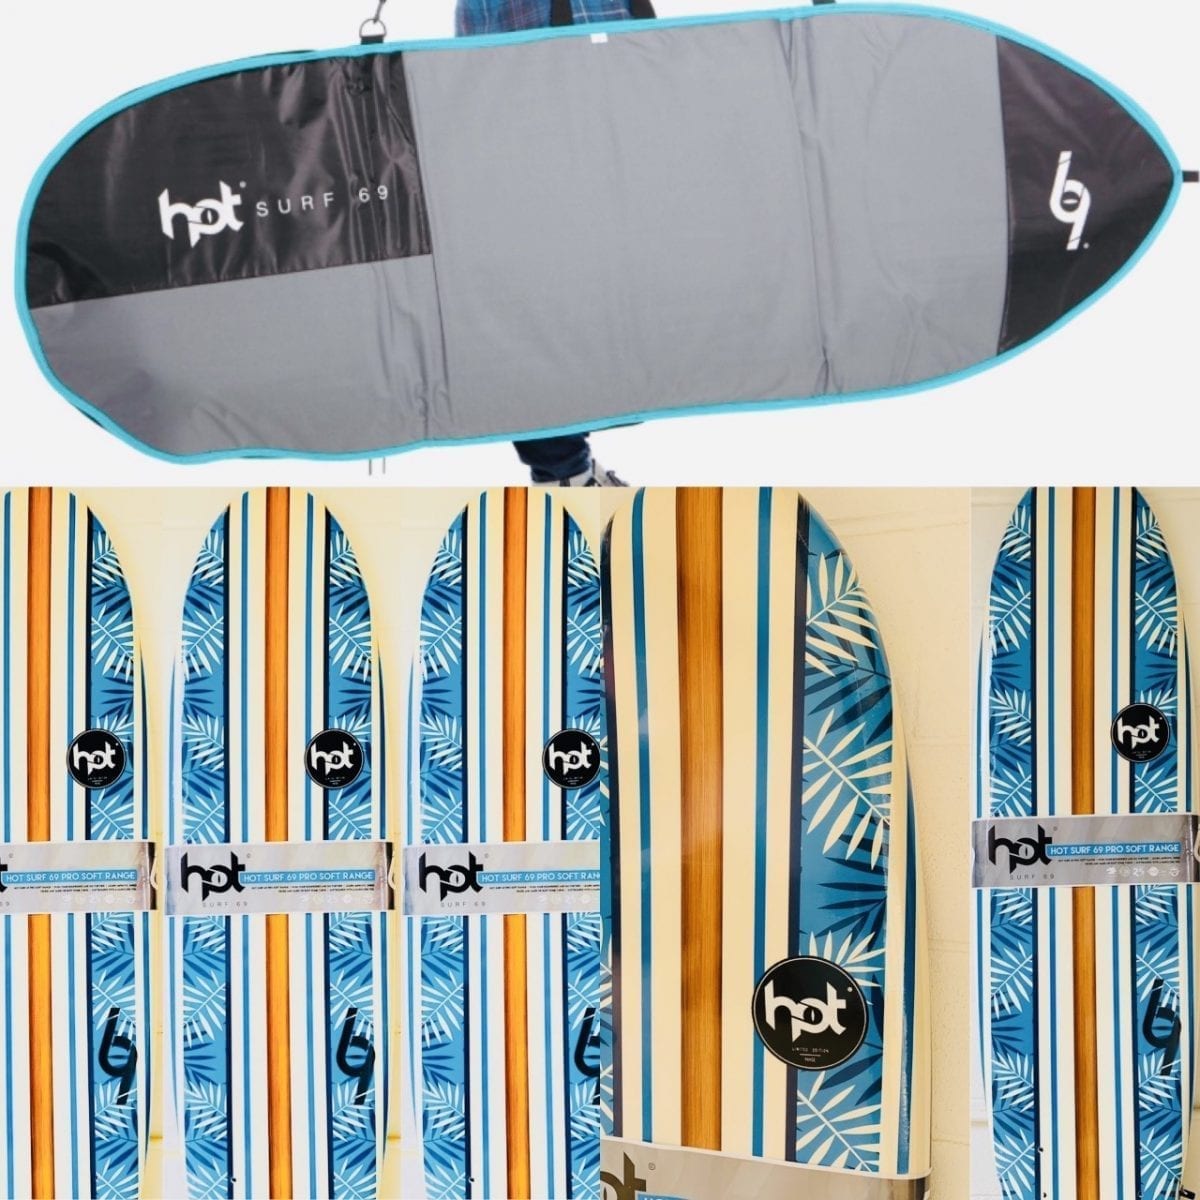 Kids surfboard Archives - Piran Surf